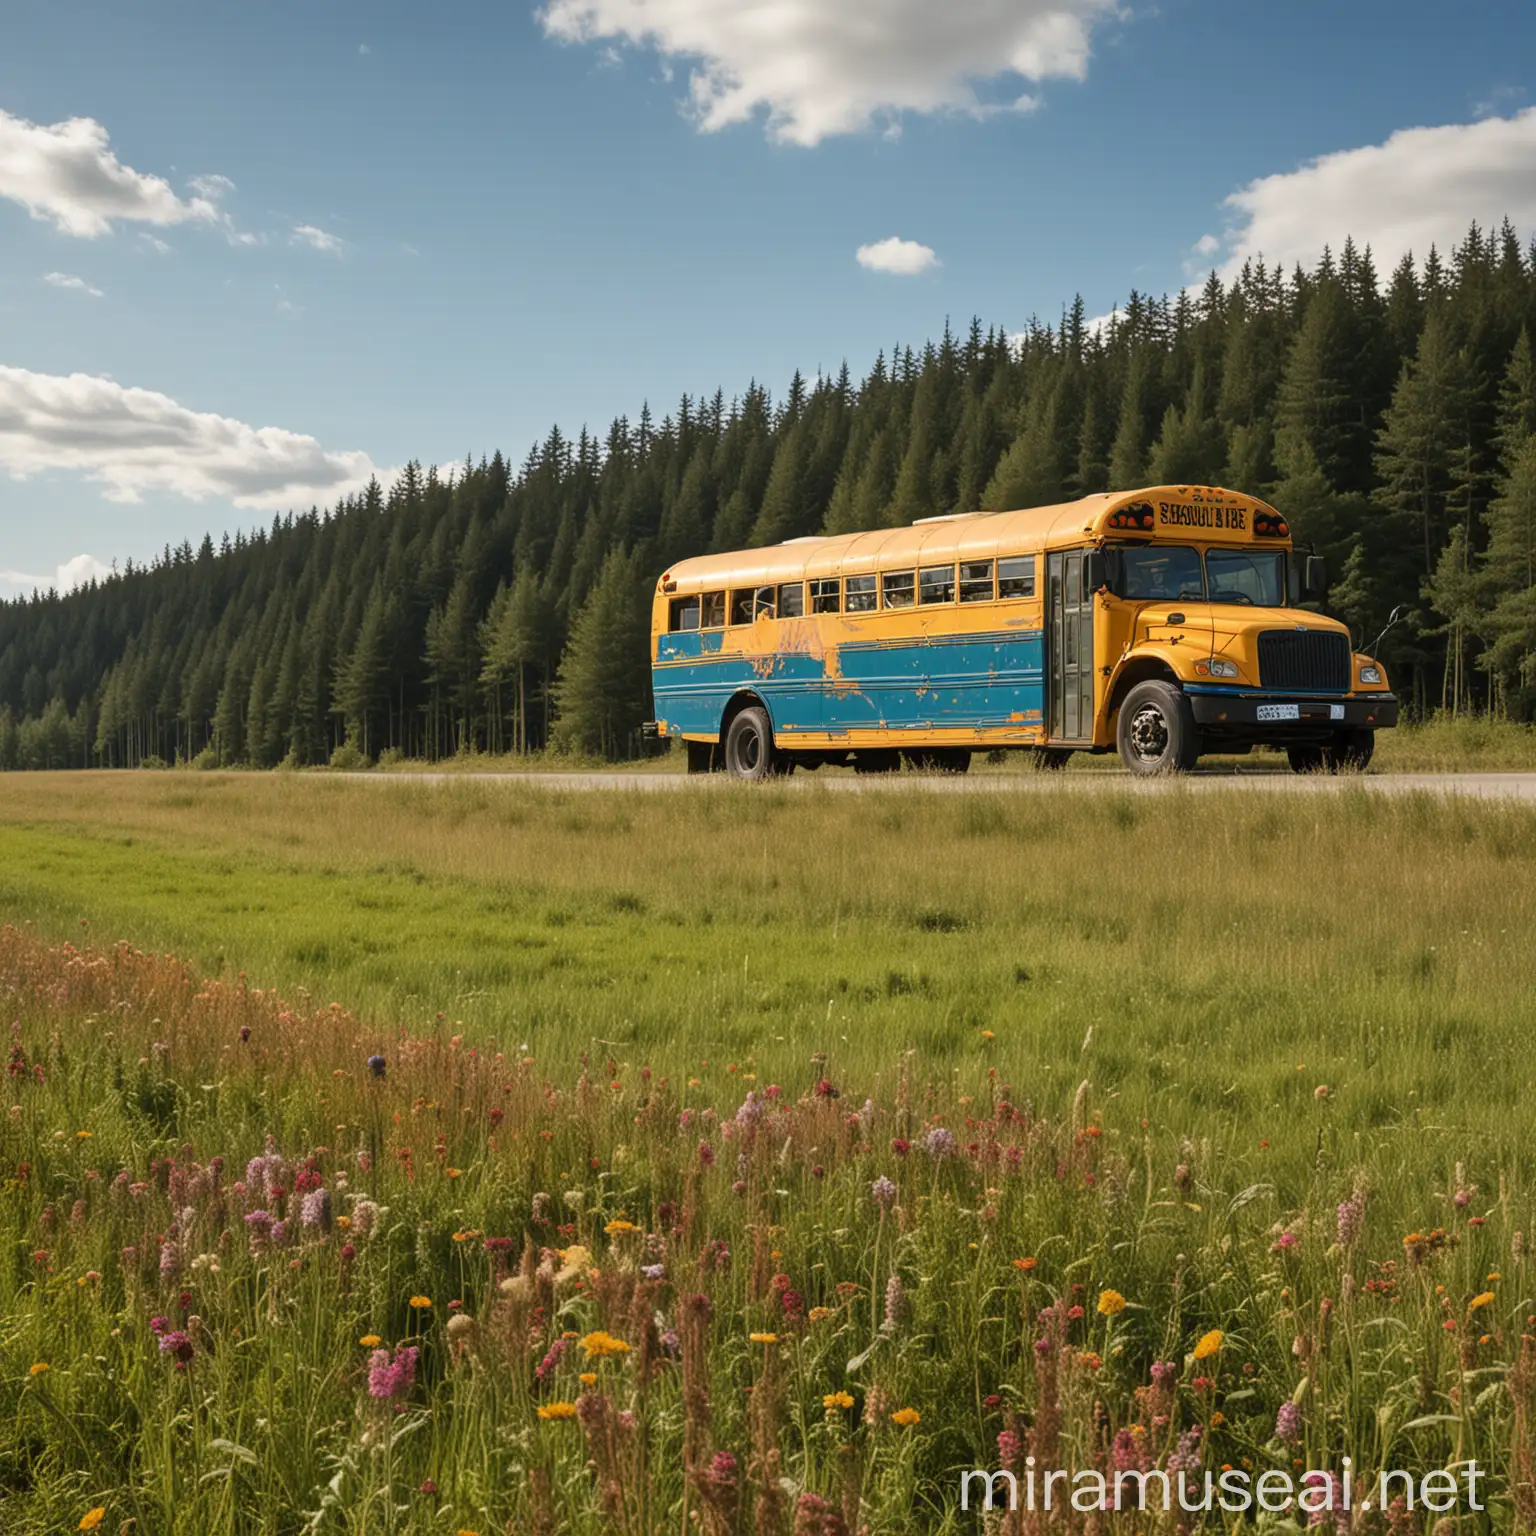 Vibrant School Bus Journey Through Countryside Fields under a Blue Sky